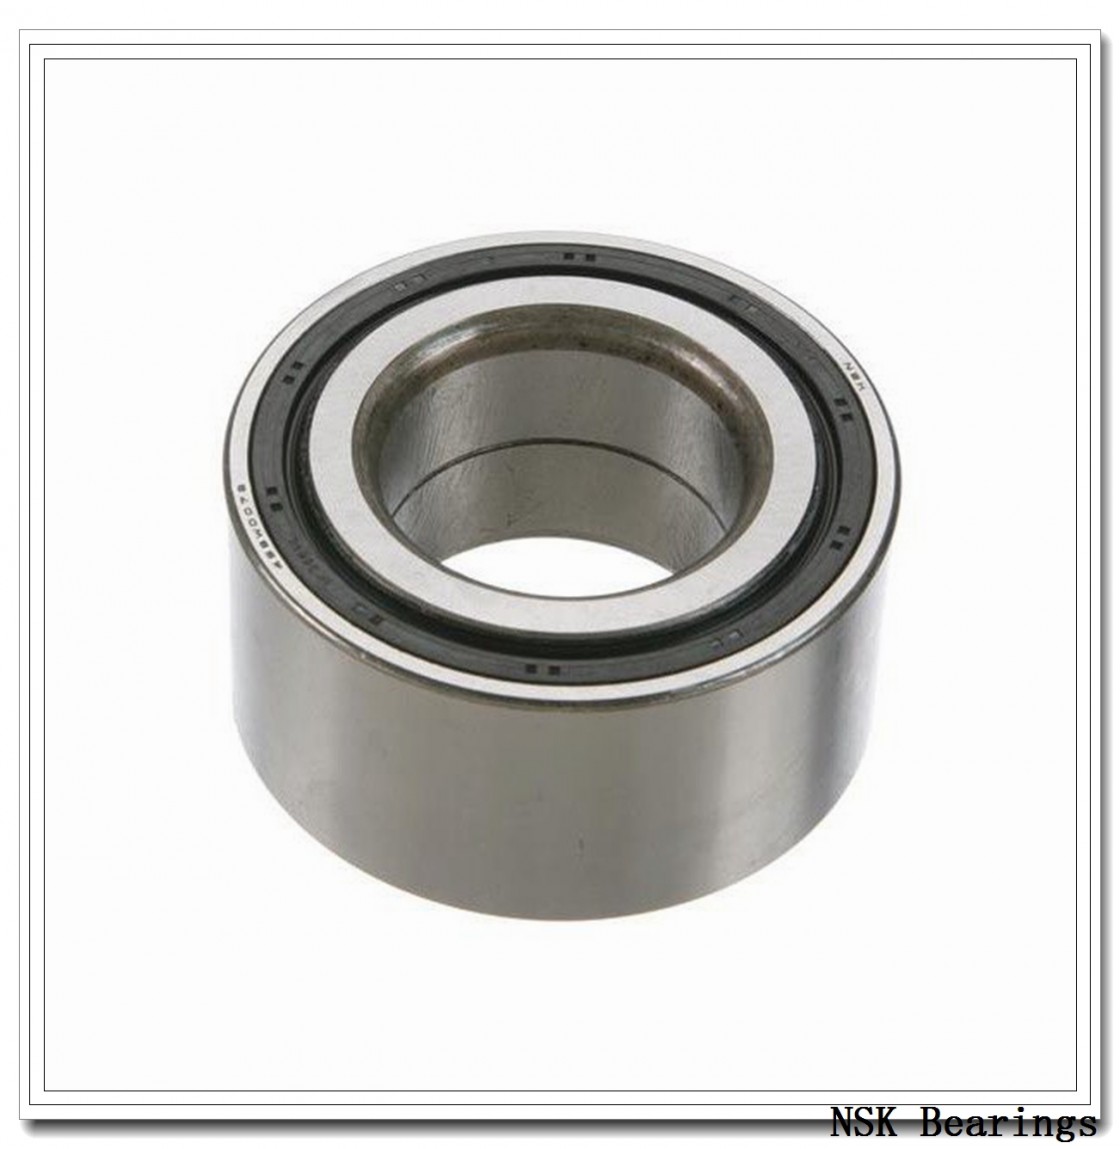 200 mm x 250 mm x 50 mm  SKF NNCF 4840 CV cylindrical roller bearings